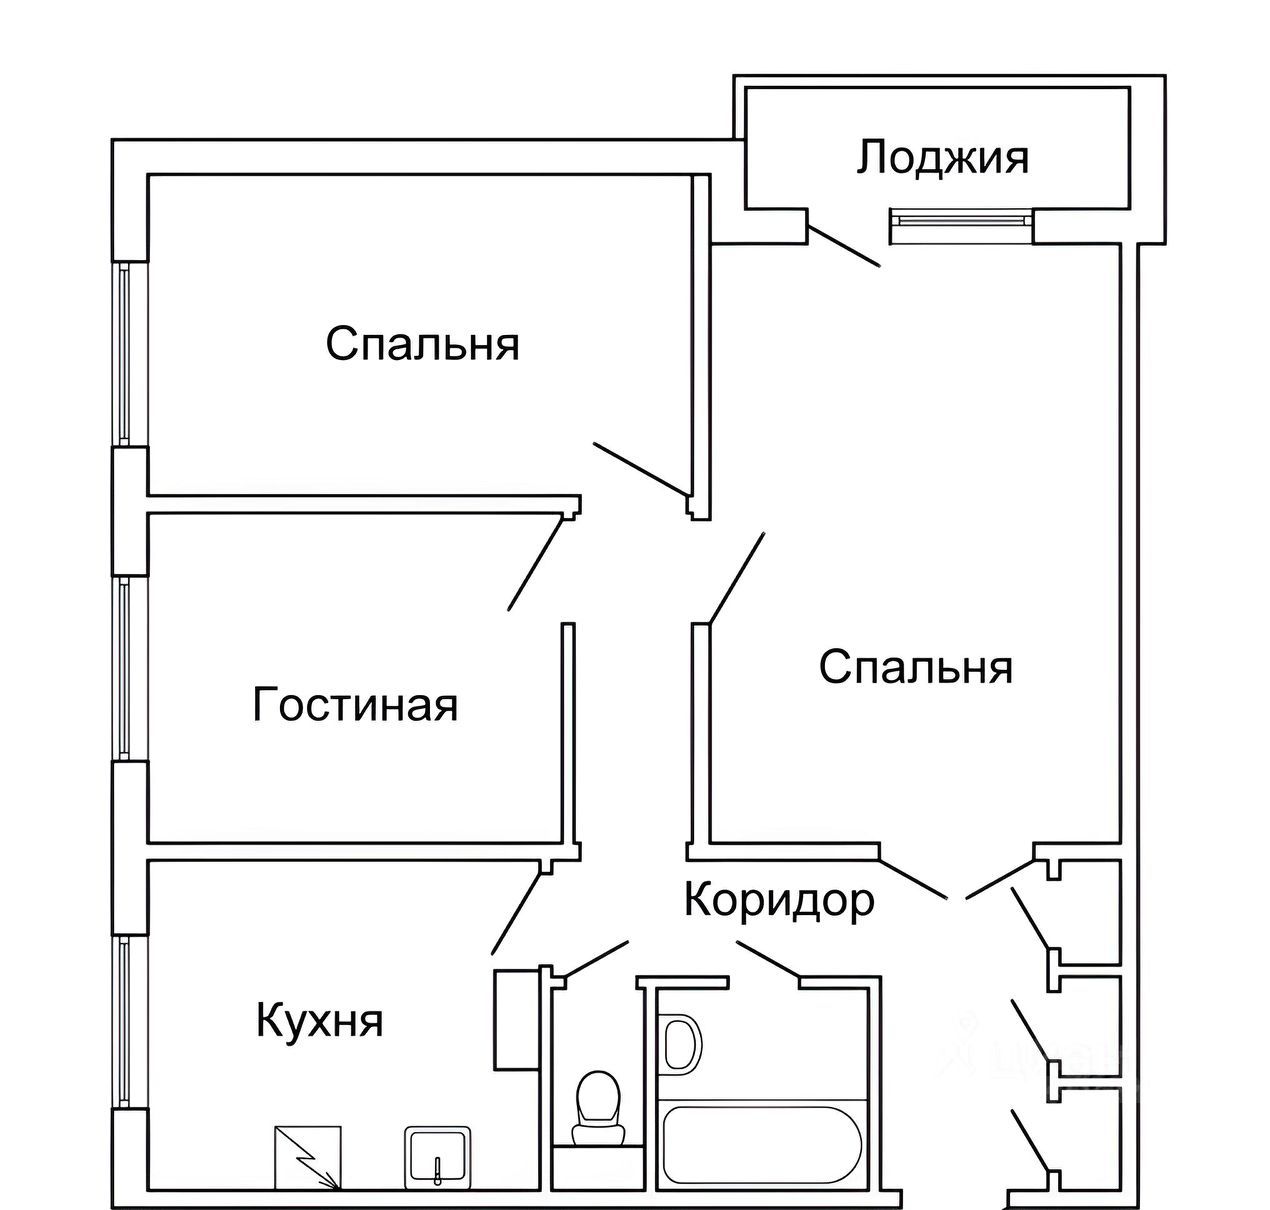 Однокомнатная квартира на карте. План трехкомнатной квартиры. Схема трехкомнатной квартиры. Чертеж 3 комнатной квартиры. Схема квартиры 3-х комнатной с мебелью.